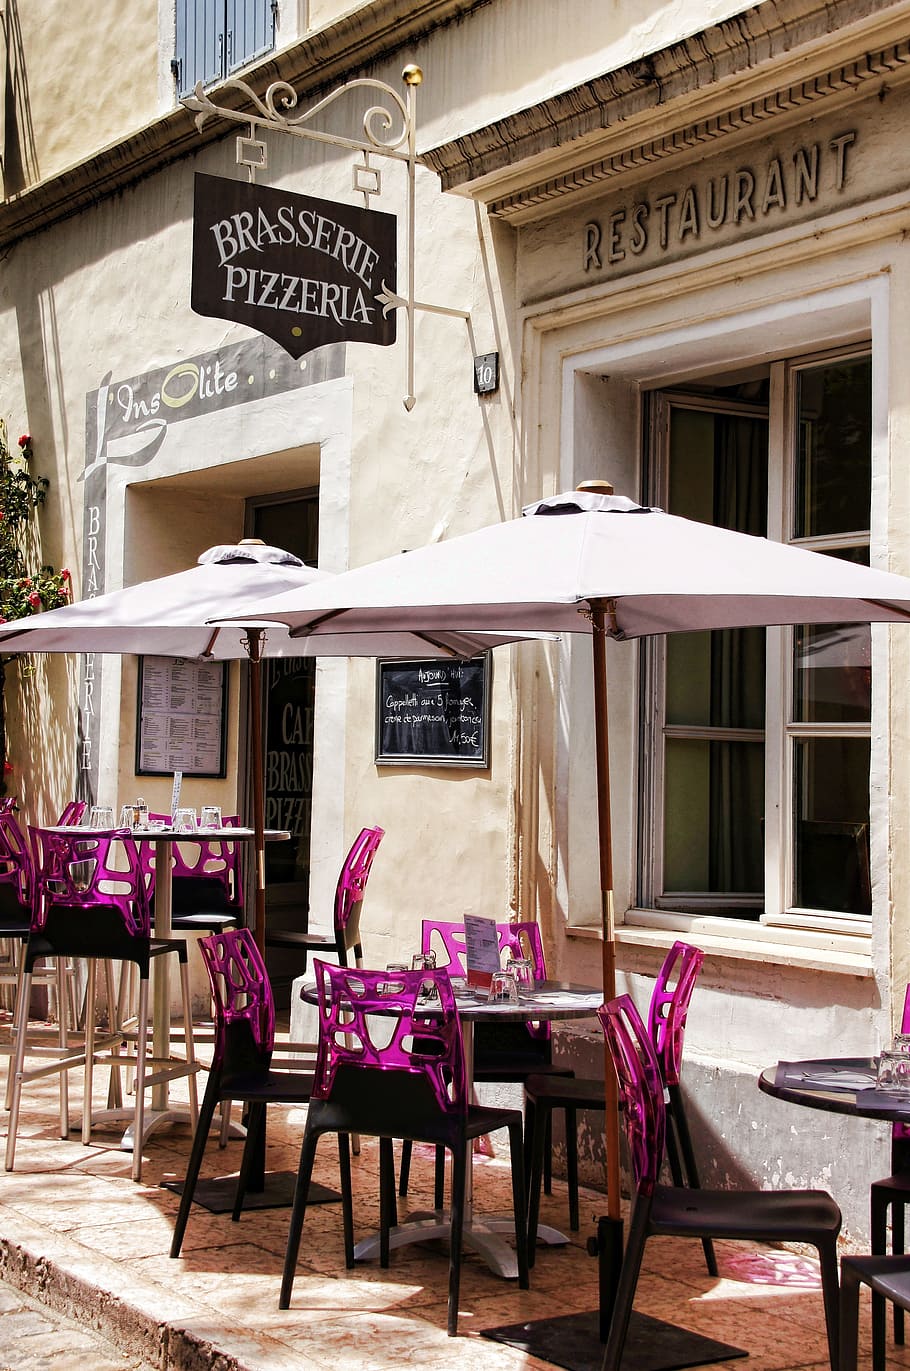 brasserie pizzeria restaurant, patio tables, france, provence, bistro, parasol, chairs, building, mediterranean, eat